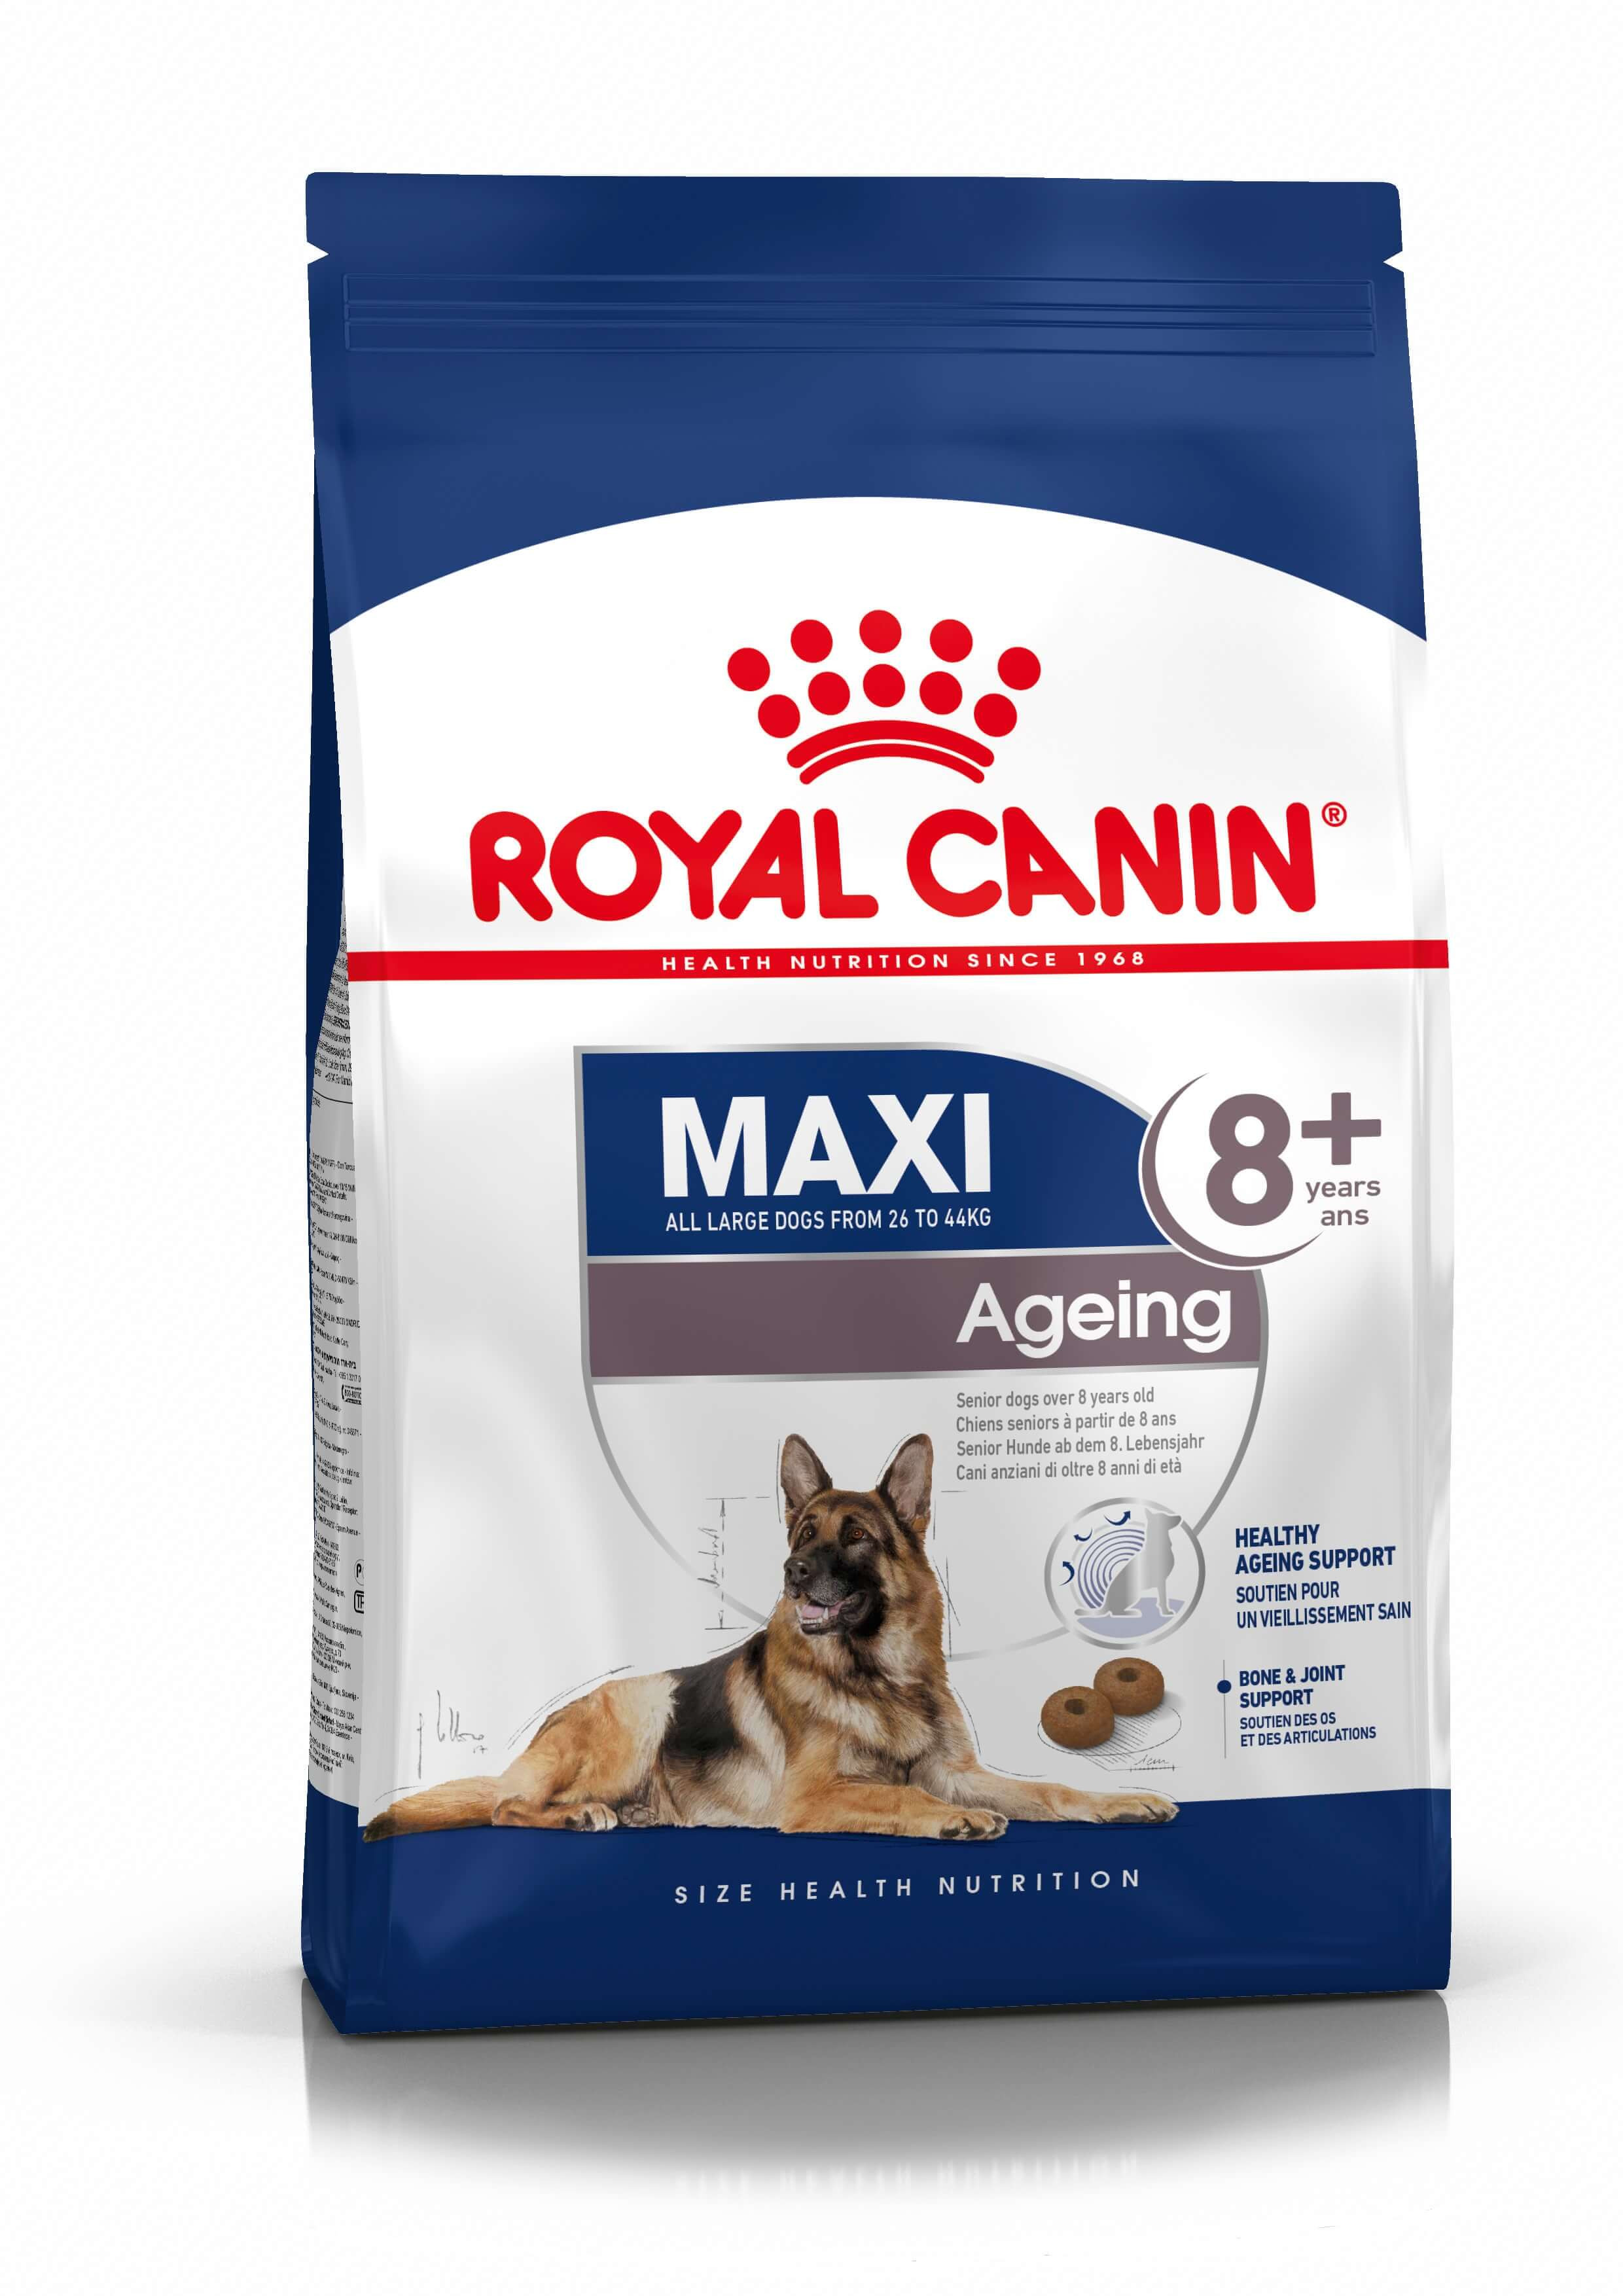 Royal canin Maxi Ageing 8+ hundfoder